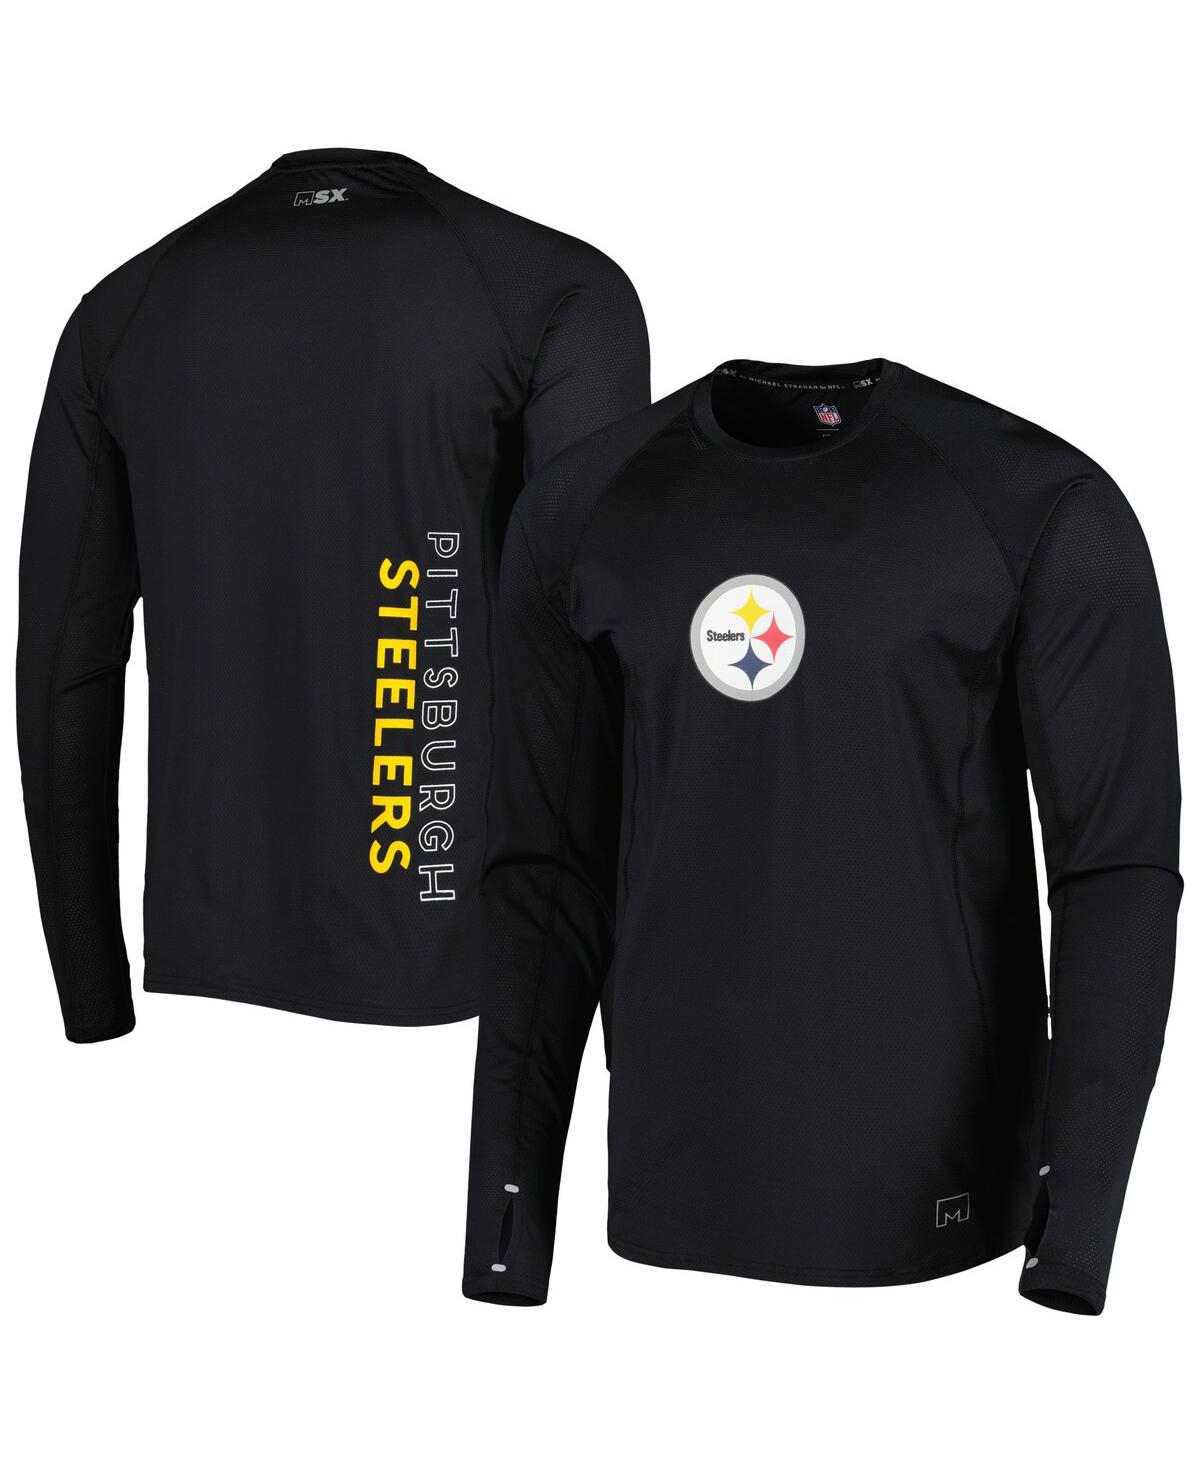 Men's Msx by Michael Strahan Black Pittsburgh Steelers Interval Long Sleeve Raglan T-shirt - Black